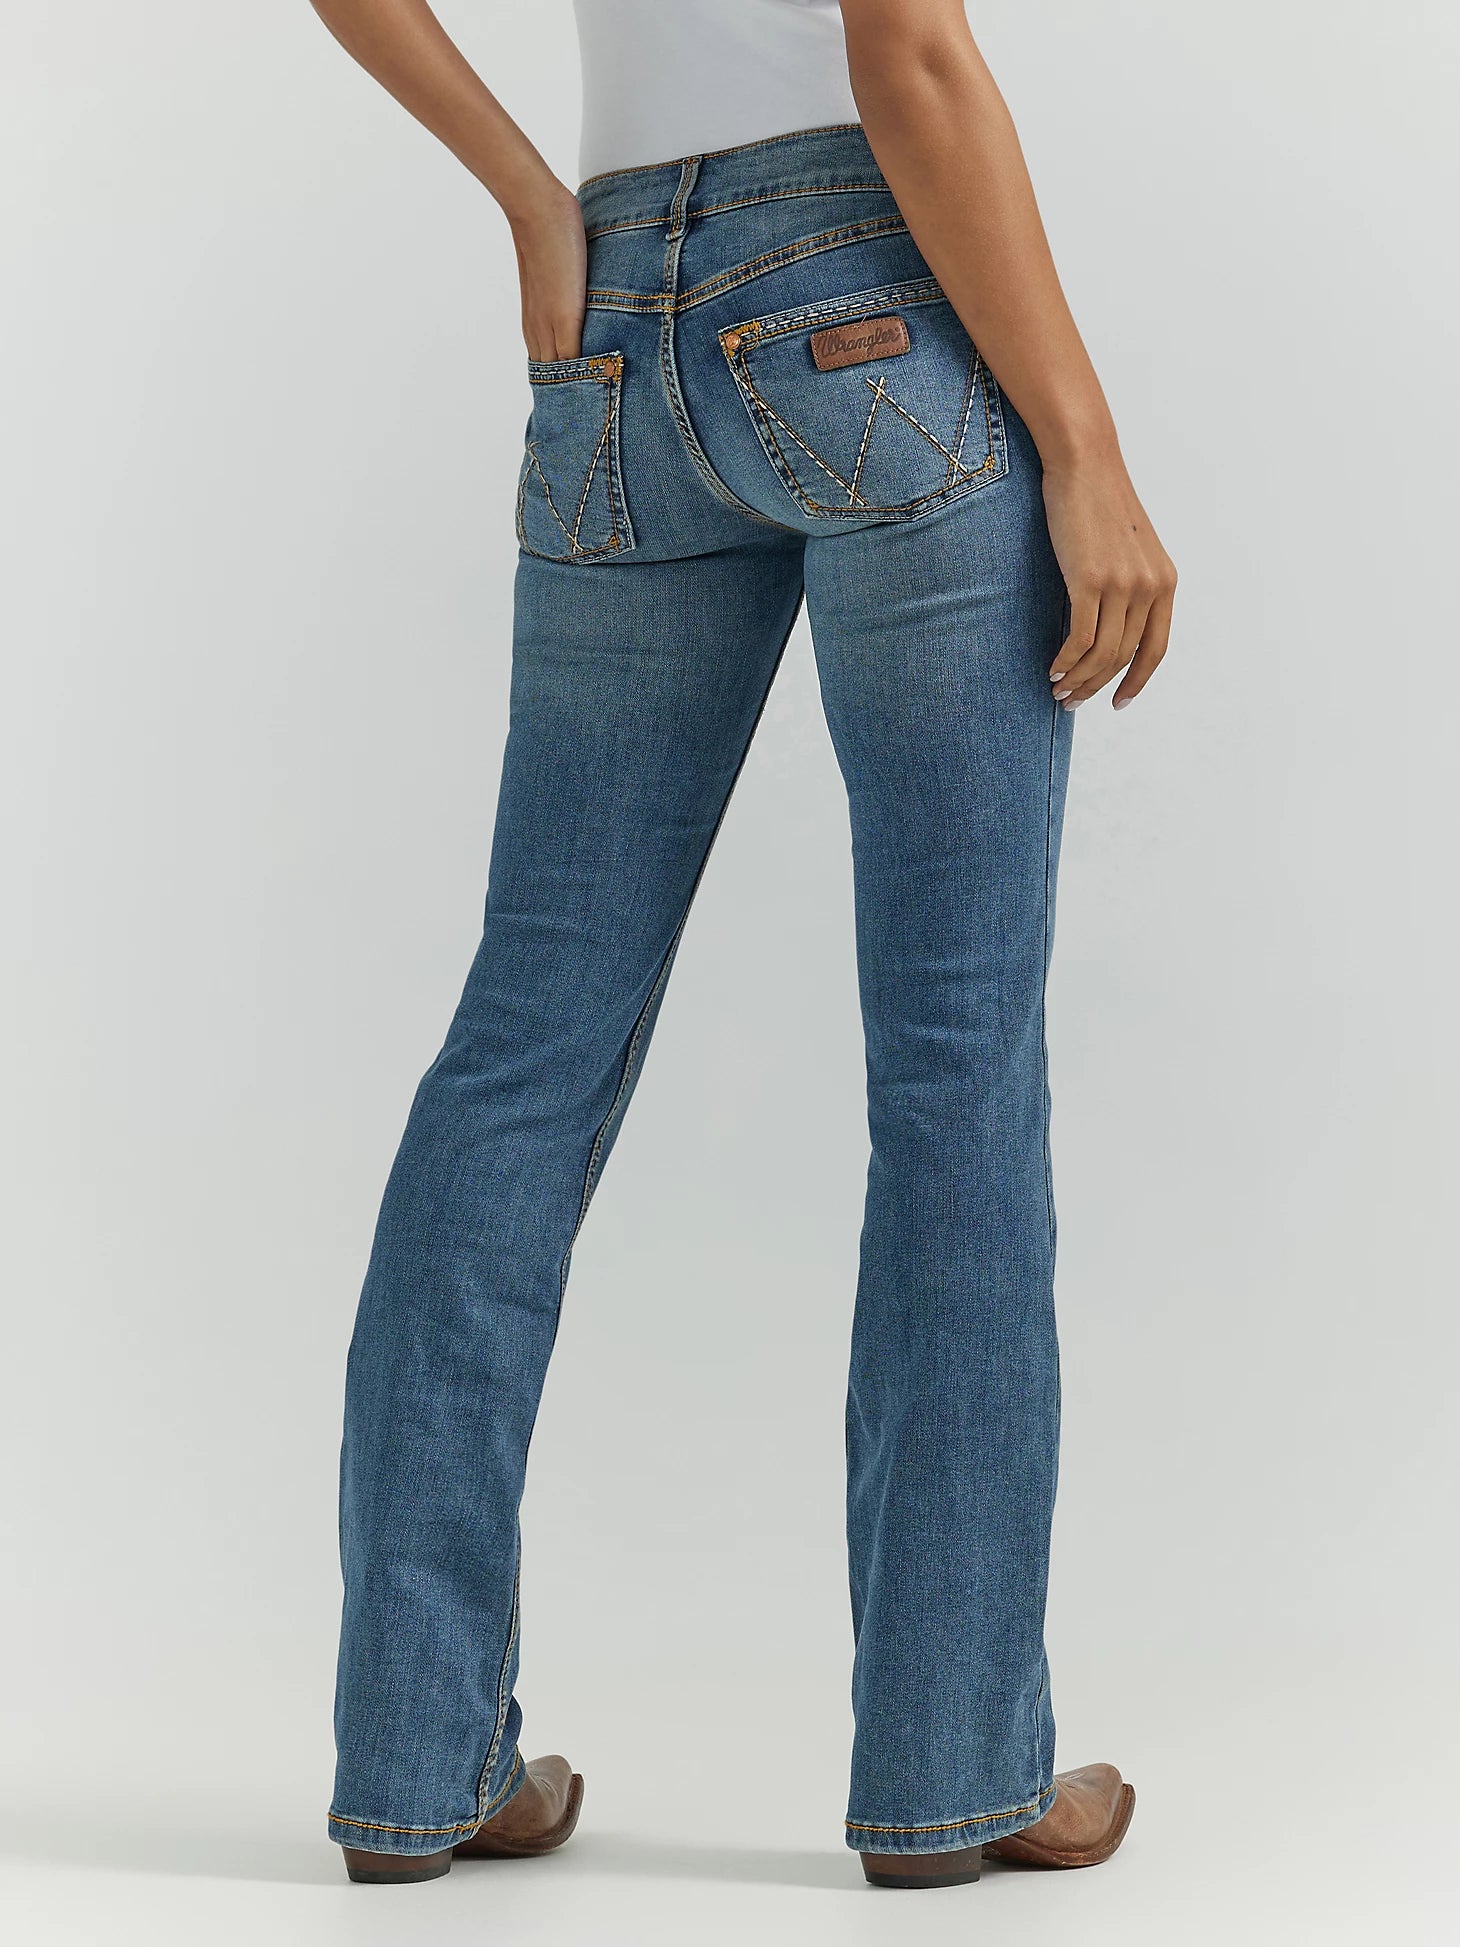 Wrangler Women's Mae Retro Jeans